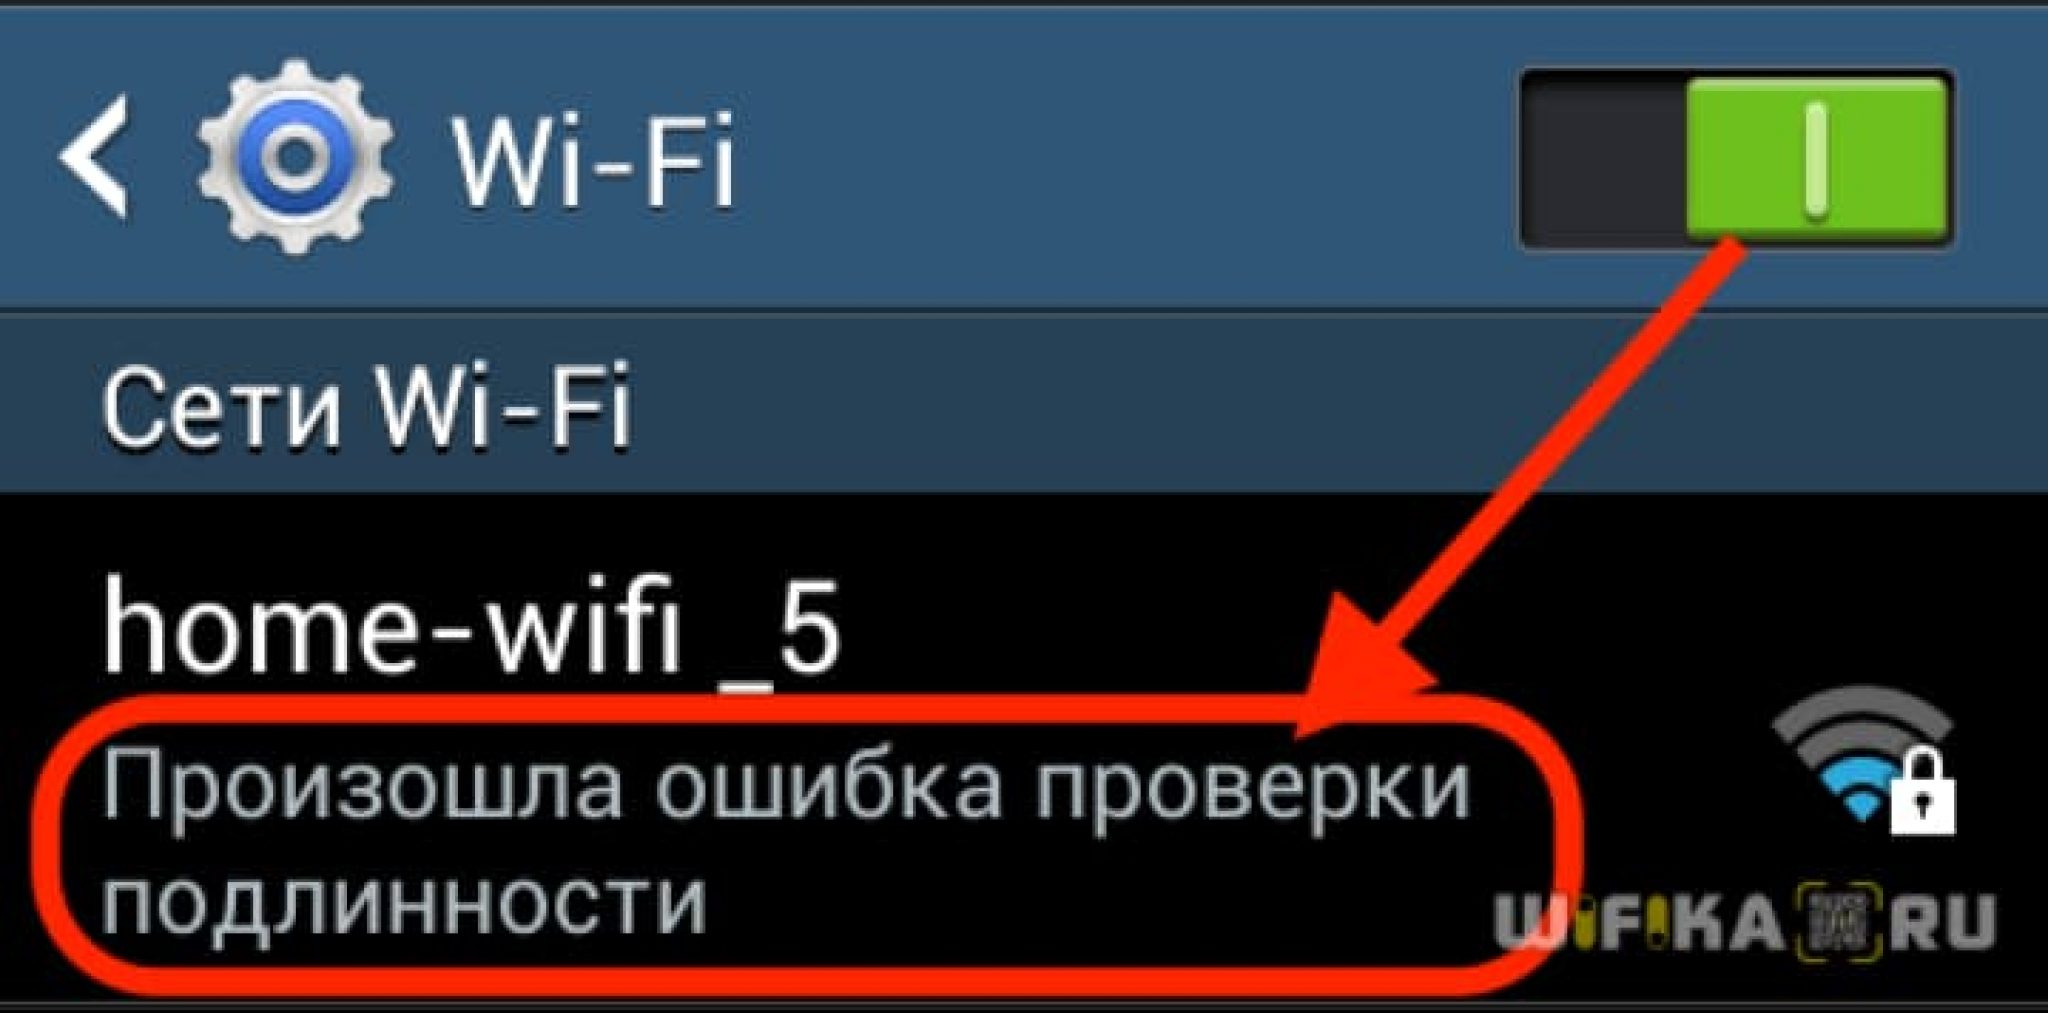 Ошибка проверки подлинности outlook android. Произошла ошибка проверки подлинности. Проверка подлинности WIFI. Произошла ошибка подлинности WIFI на телефоне. Произошла ошибка проверки подлинности при подключении WIFI.